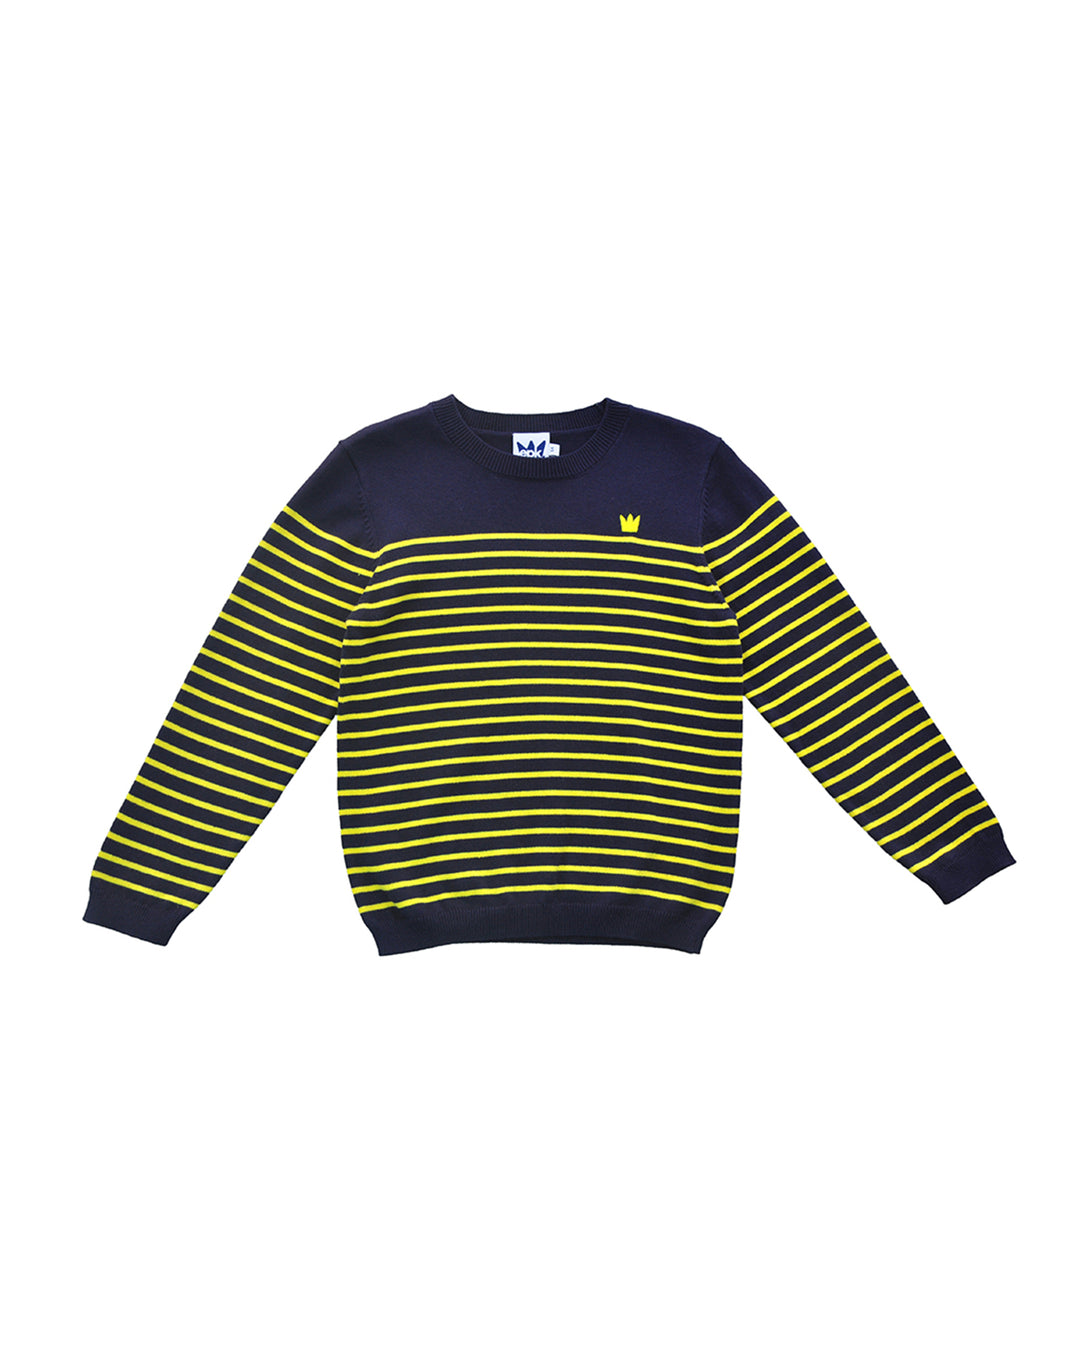 Suéter azul marino con rayas amarillas